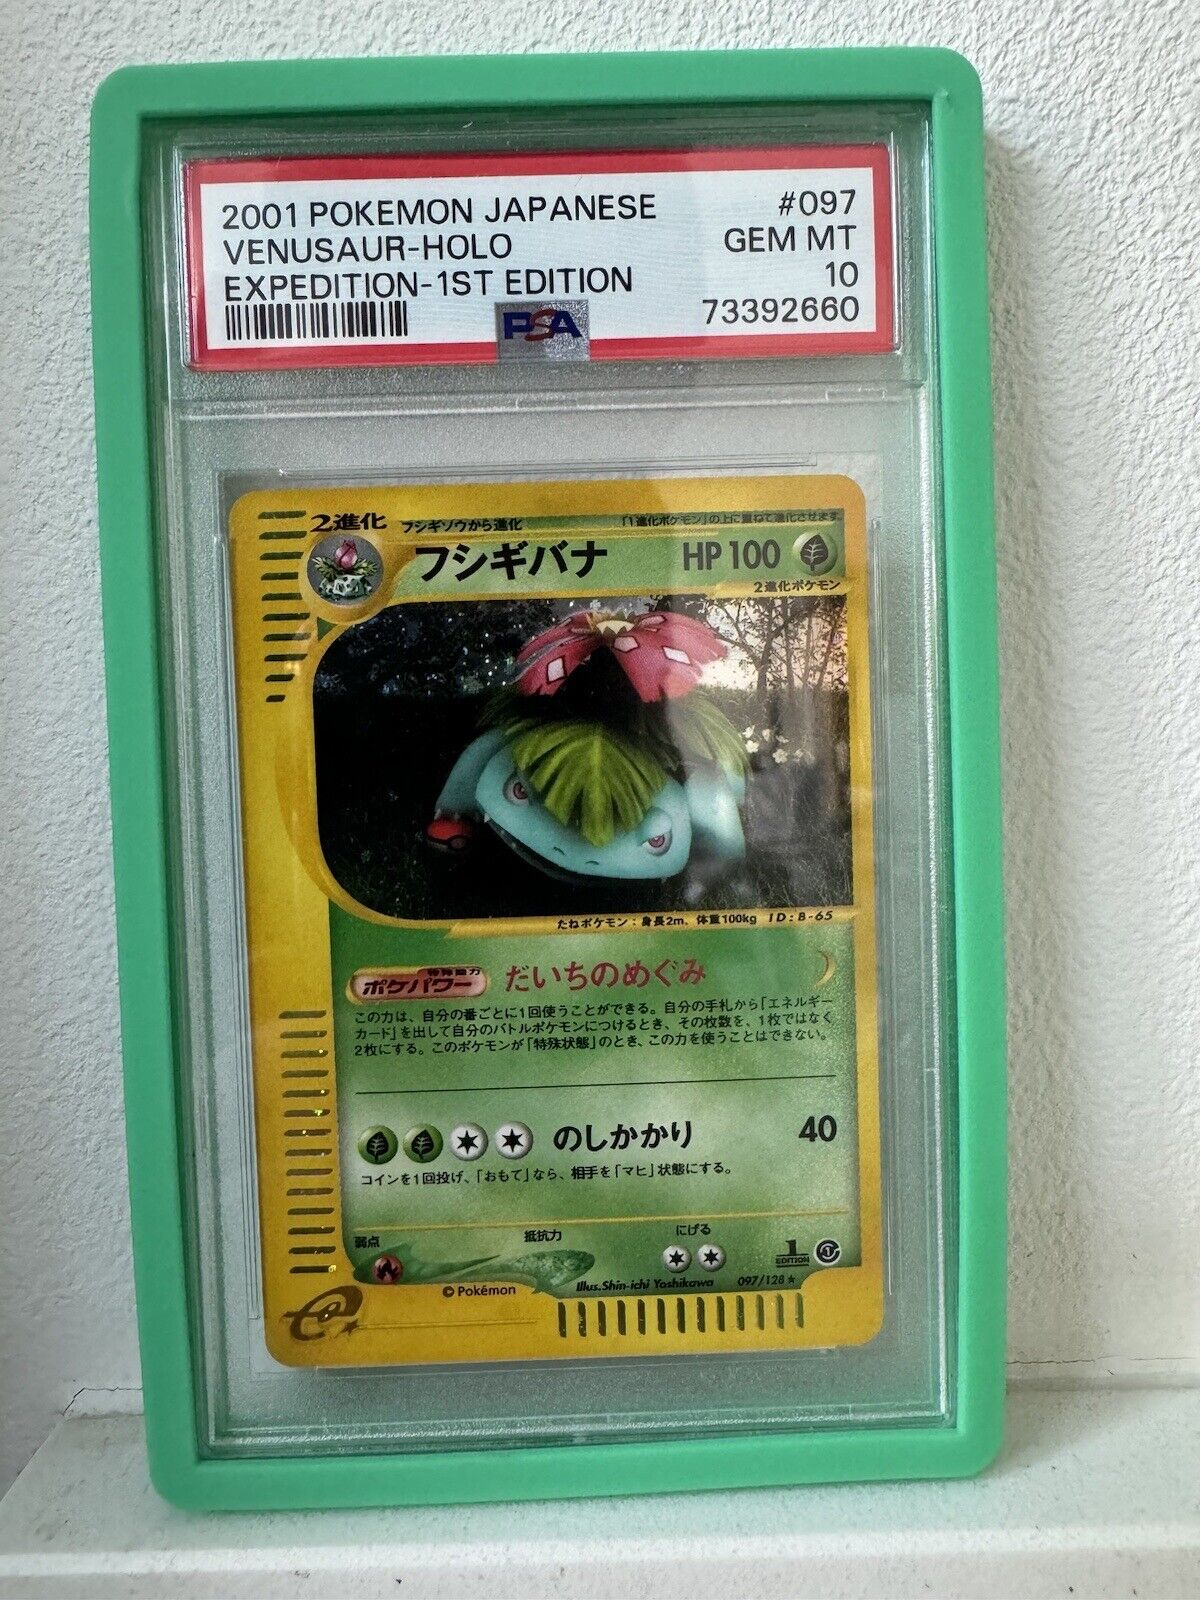 Venusaur #97 1st Edition Holo Japanese Expedition Pokemon Card GEM MT PSA 10